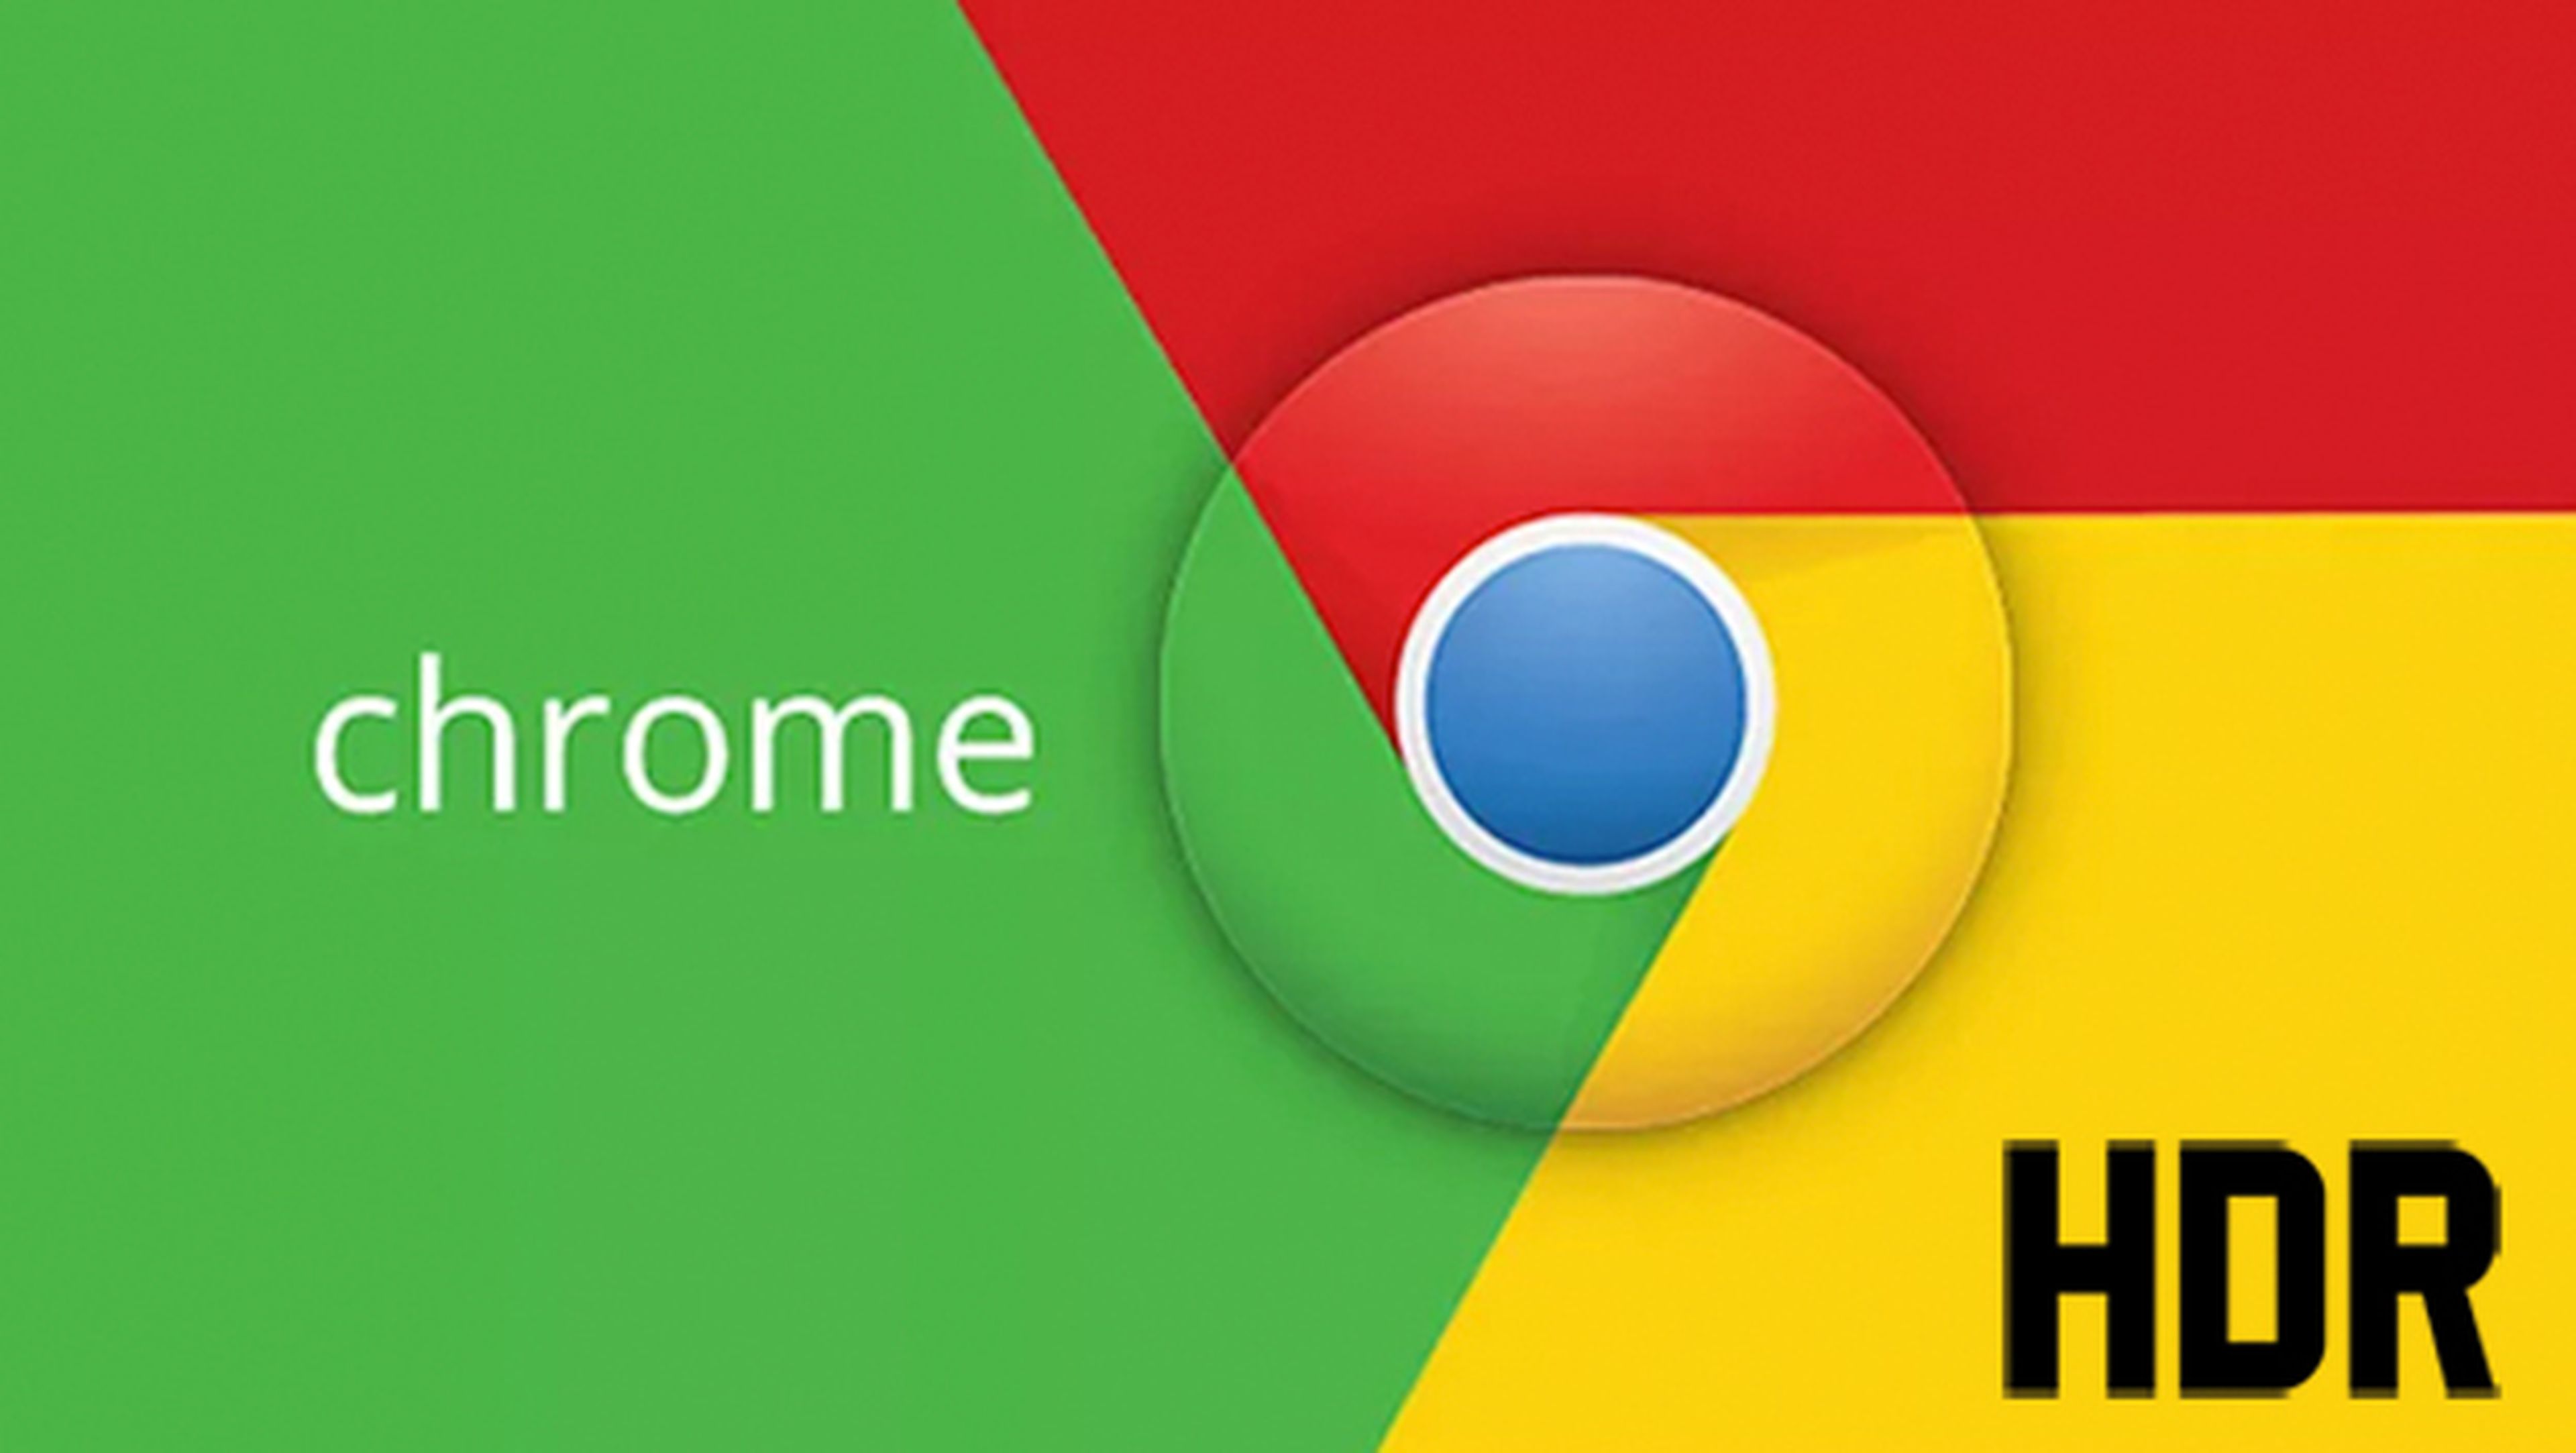 Chrome tendrá HDR en Android